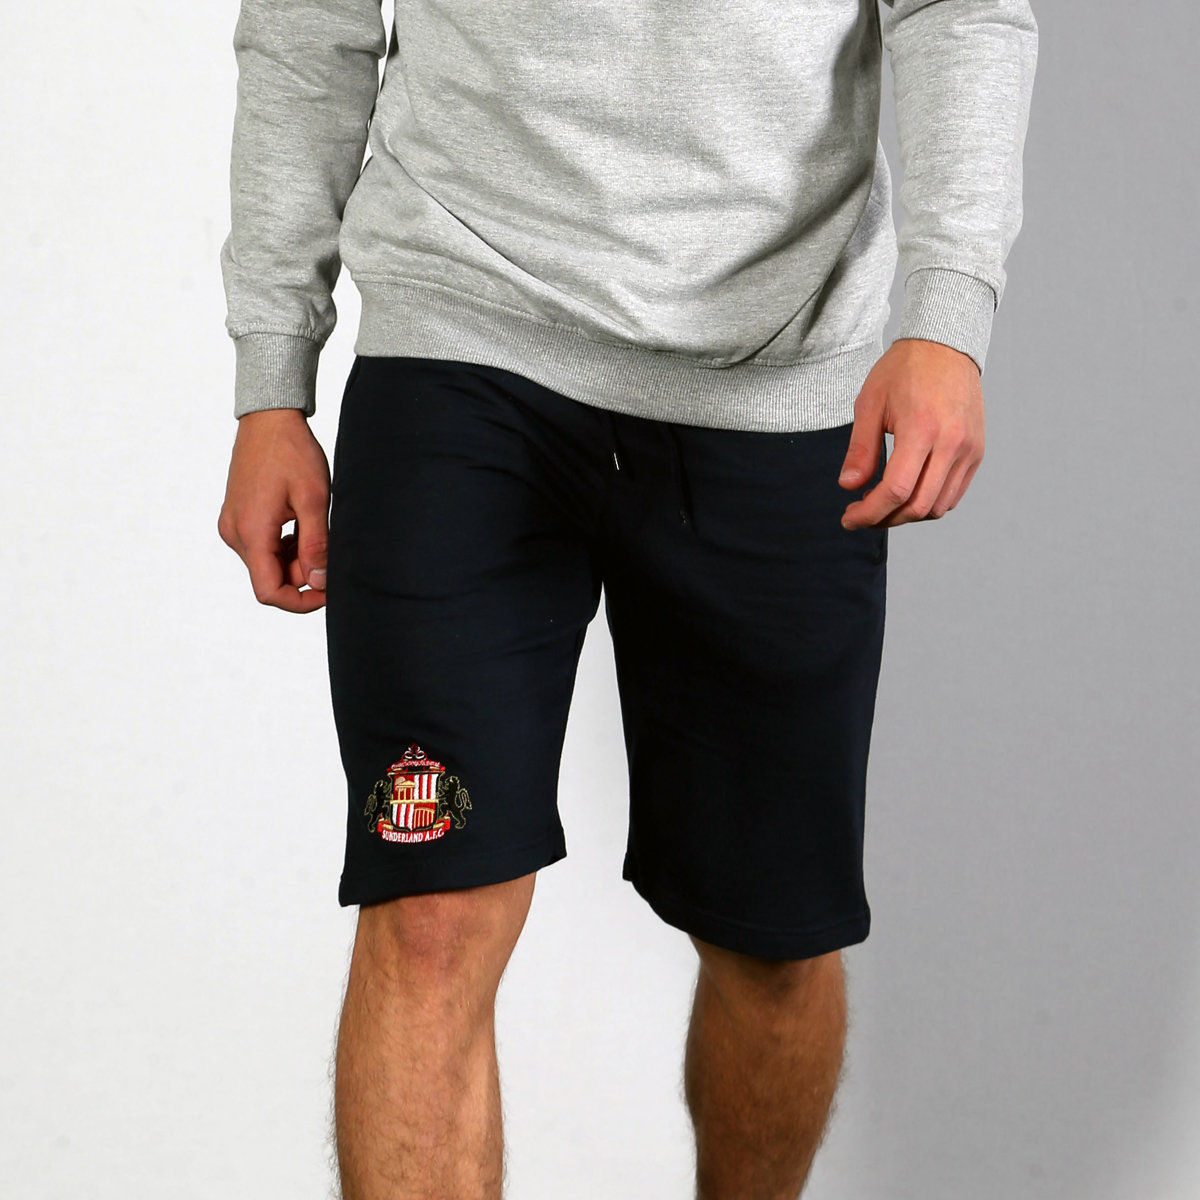 Buy the SAFC Lounge Shorts online at Sunderland AFC Store